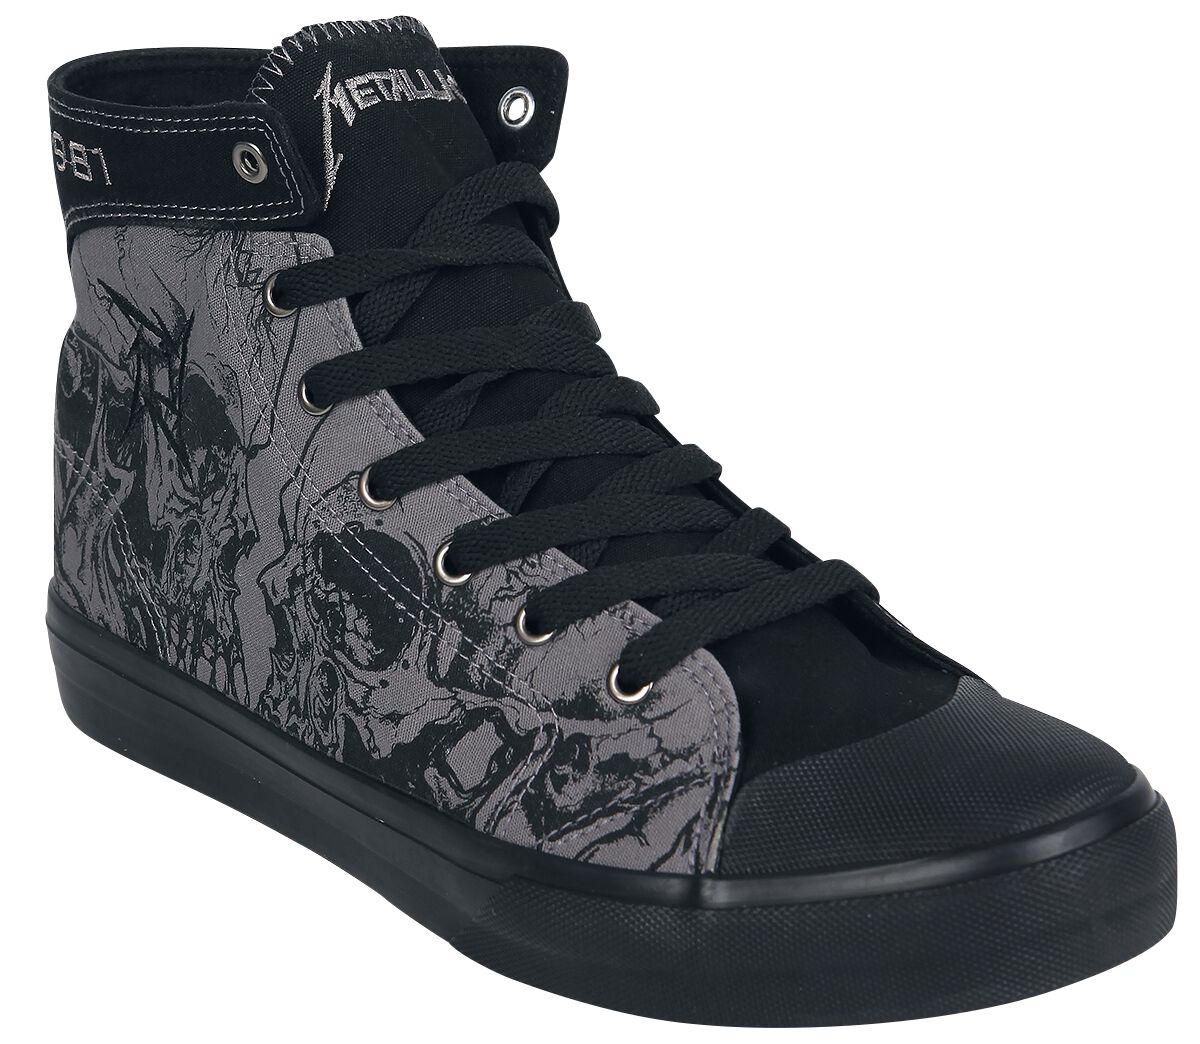 Metallica Sneaker high - EMP Signature Collection - EU37 bis EU47 - Größe EU43 - grau/schwarz  - EMP exklusives Merchandise!